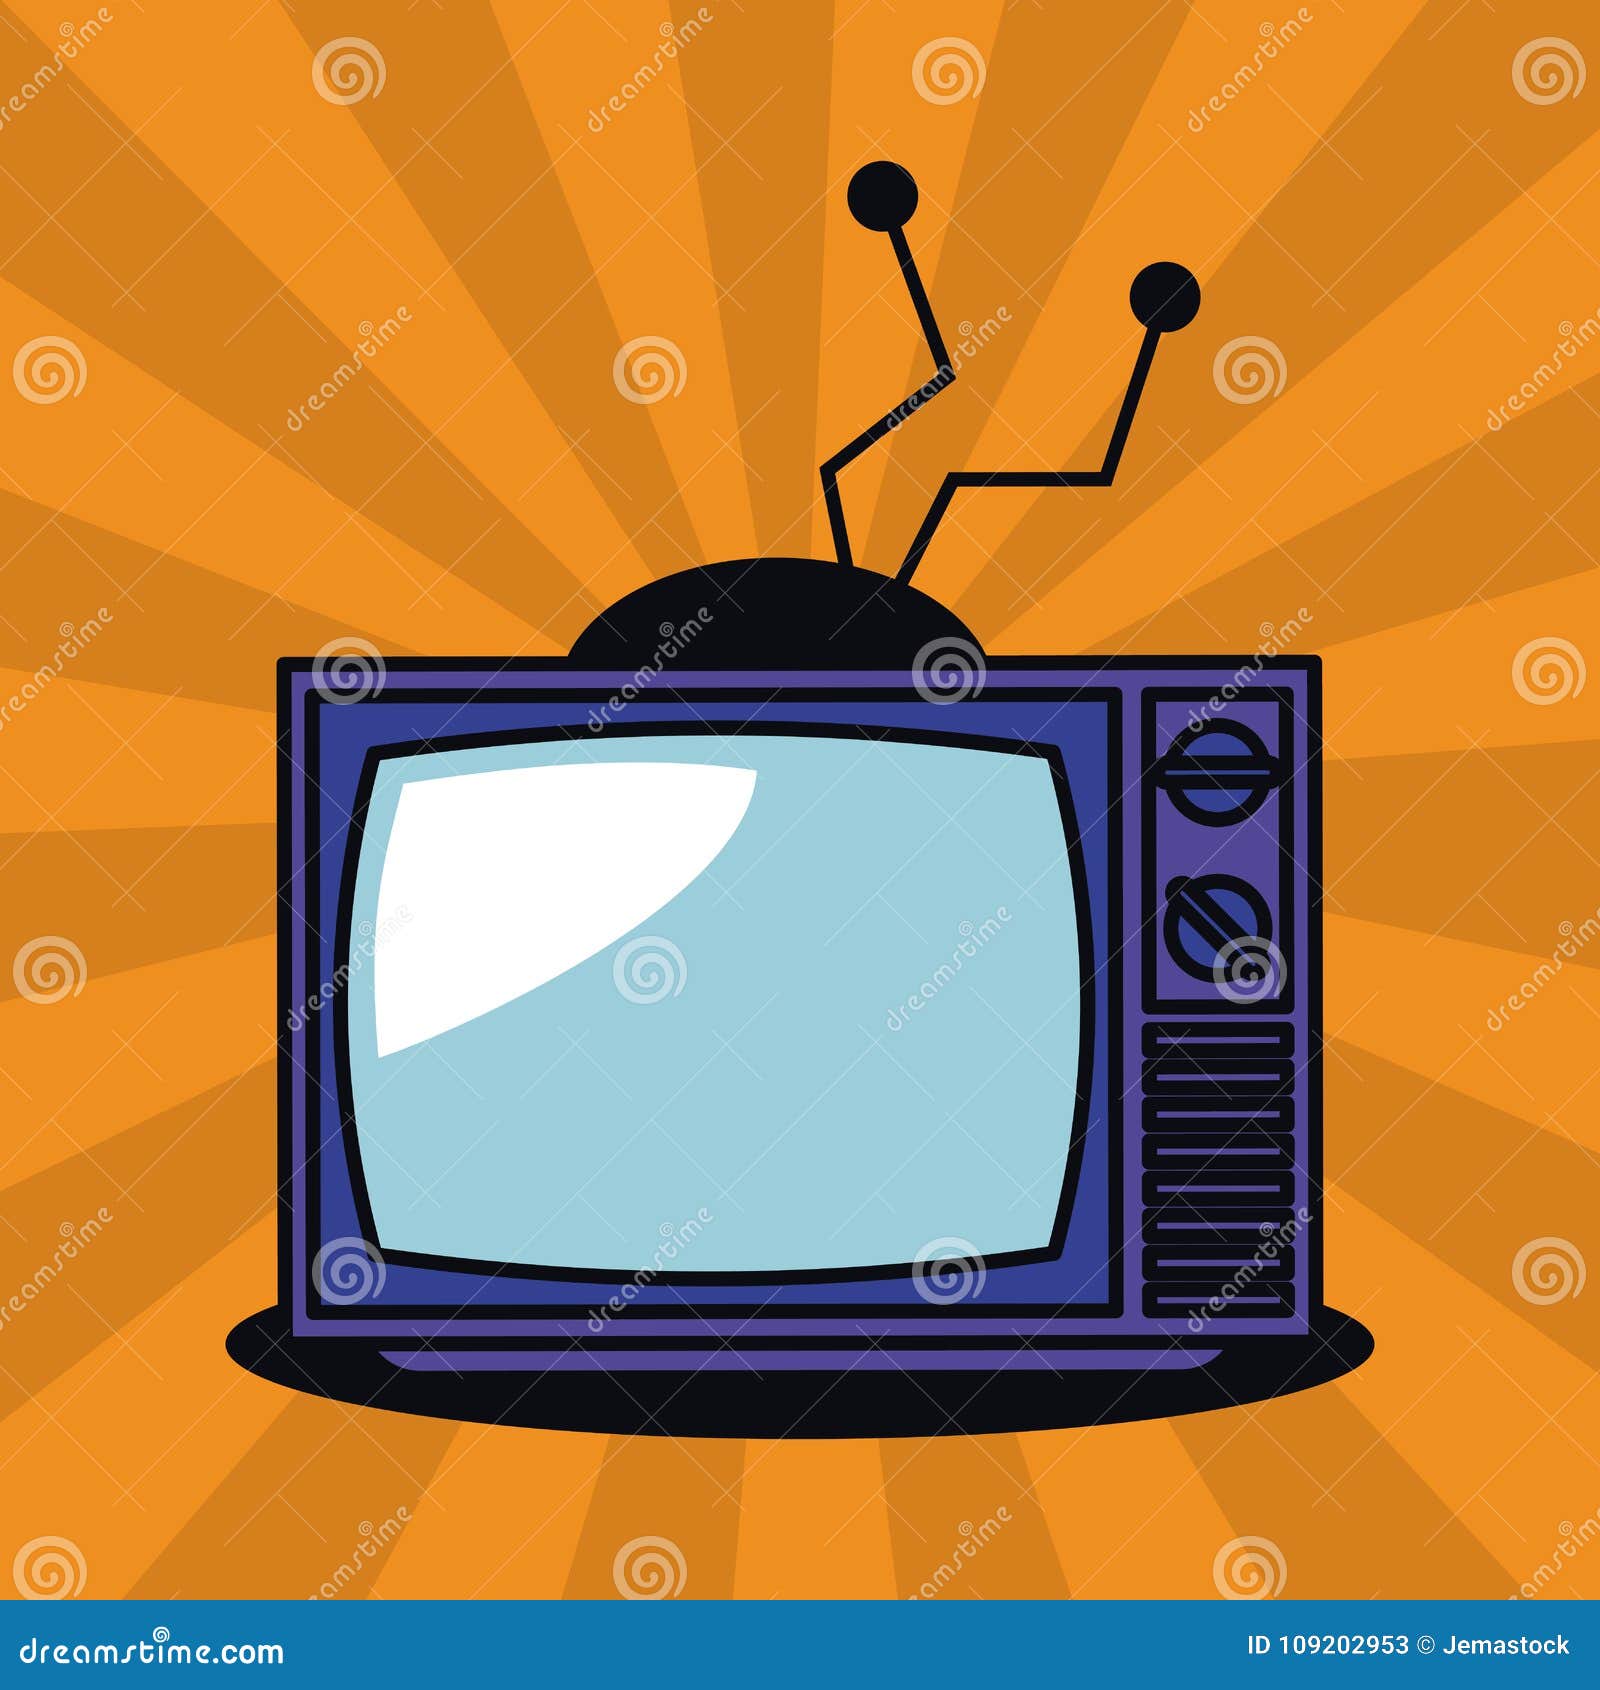 Old tv pop art stock vector. Illustration of neon, funky - 109202953